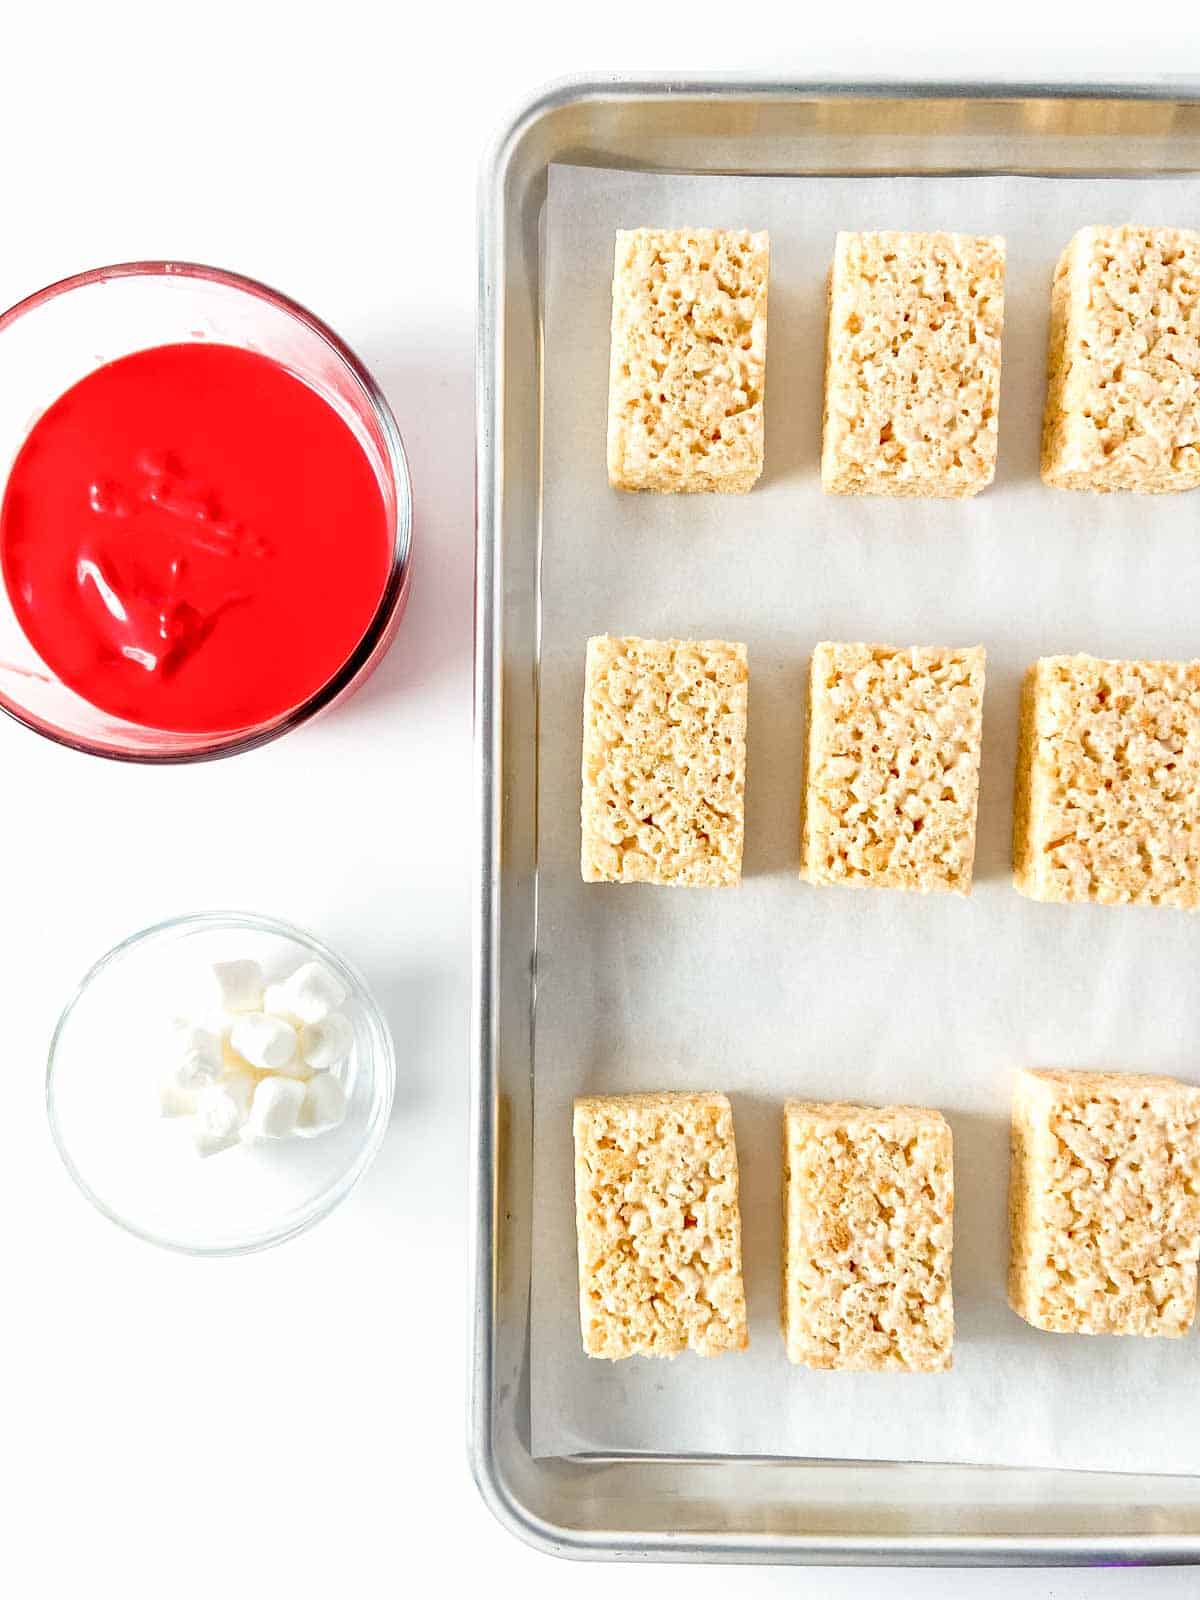 cut rice krispie treats into rectangles